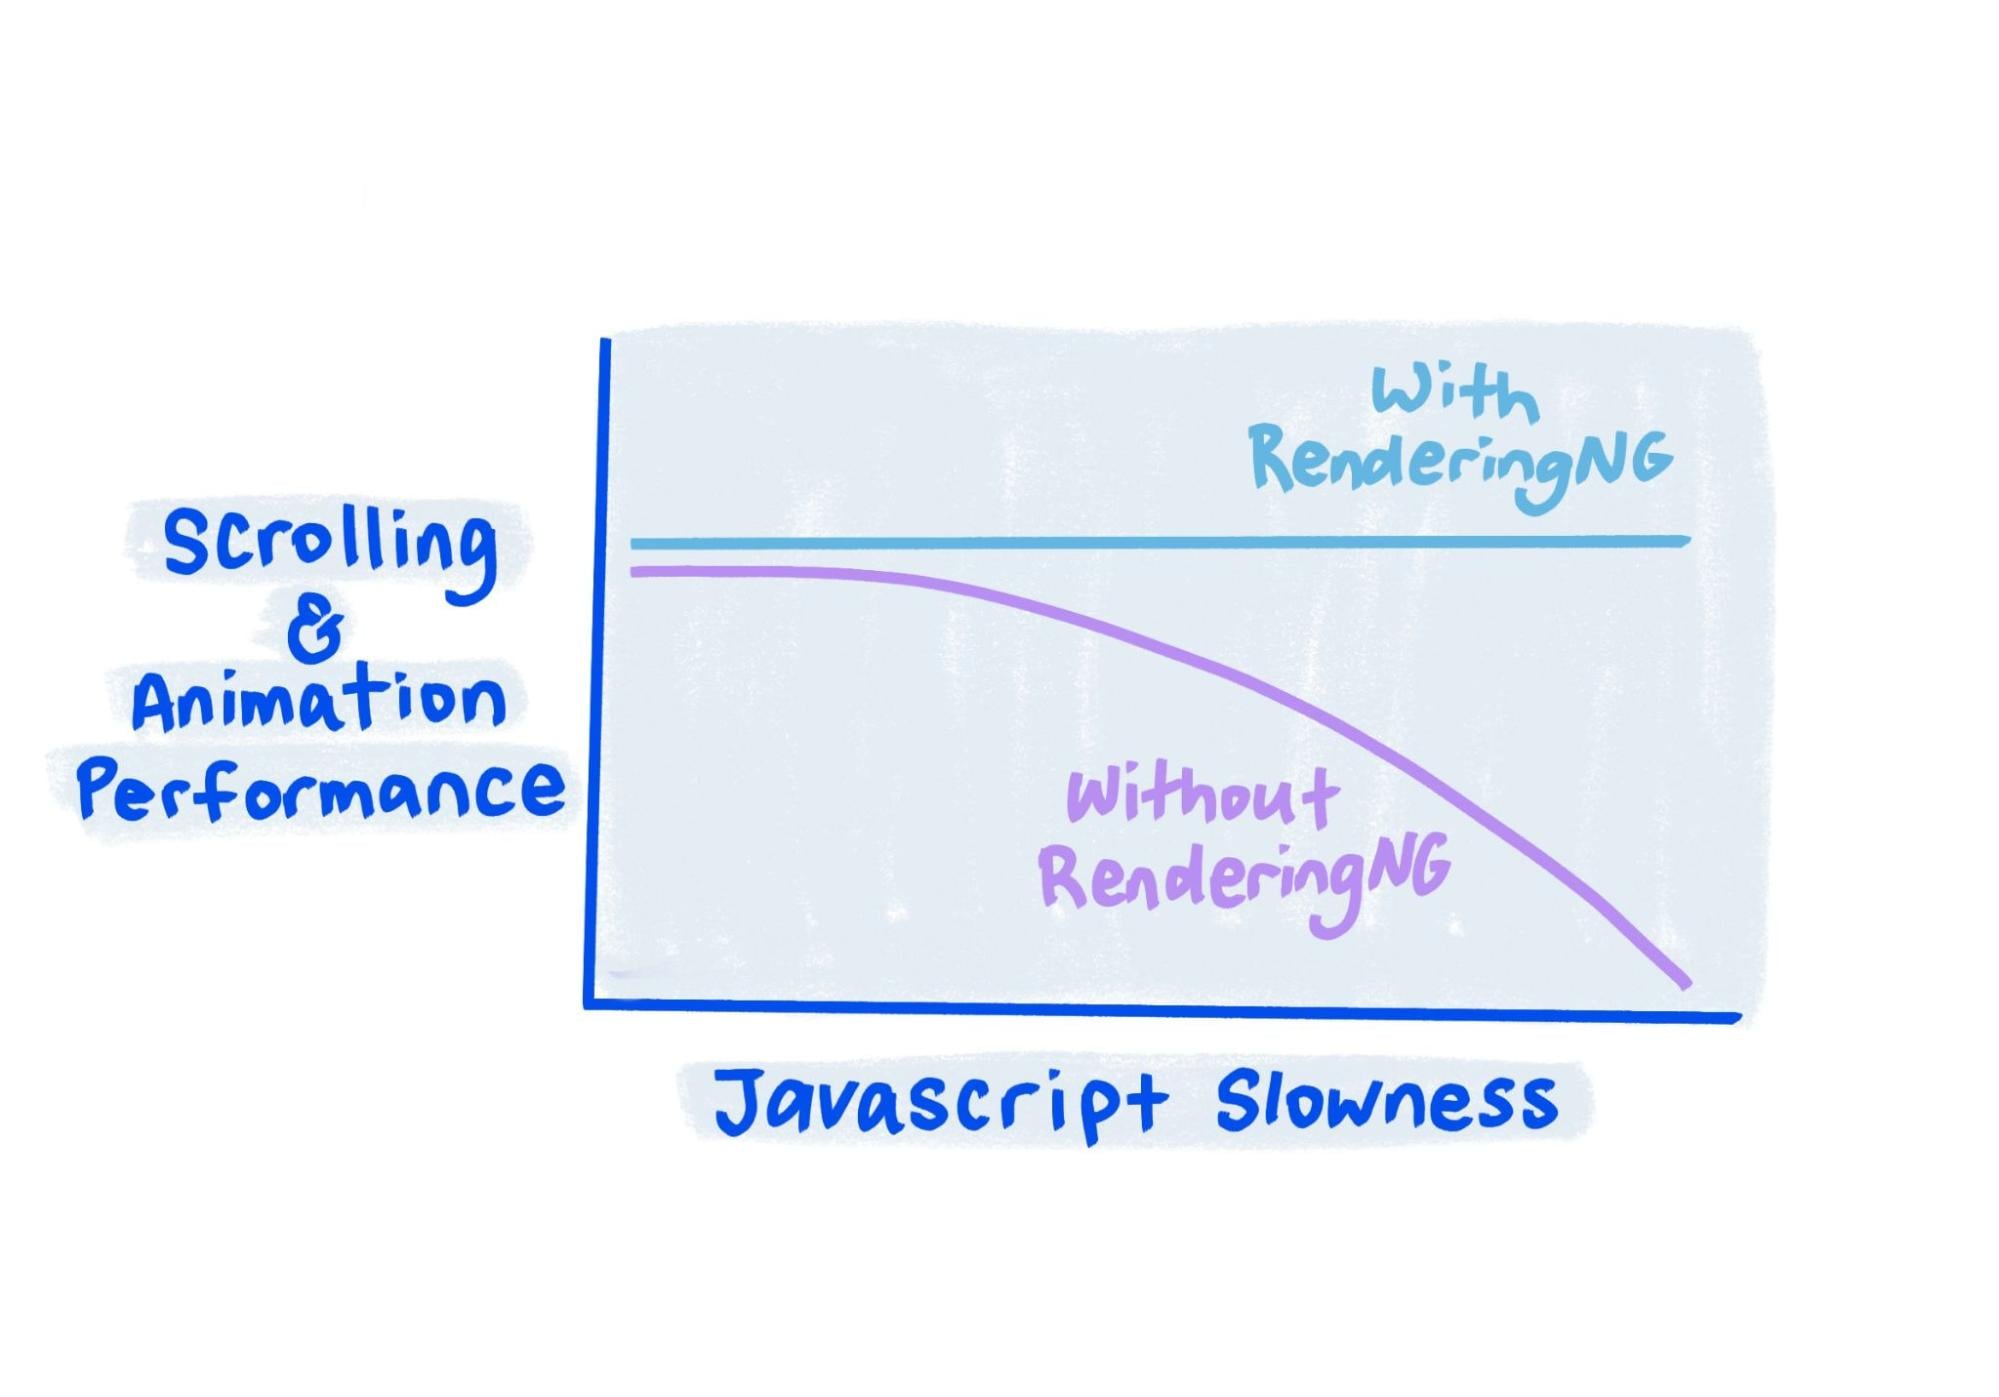 Sketch แสดงให้เห็นว่าเมื่อใช้ RenderingNG ได้อย่างมีประสิทธิภาพแม้ในขณะที่ JavaScript ทำงานช้ามาก